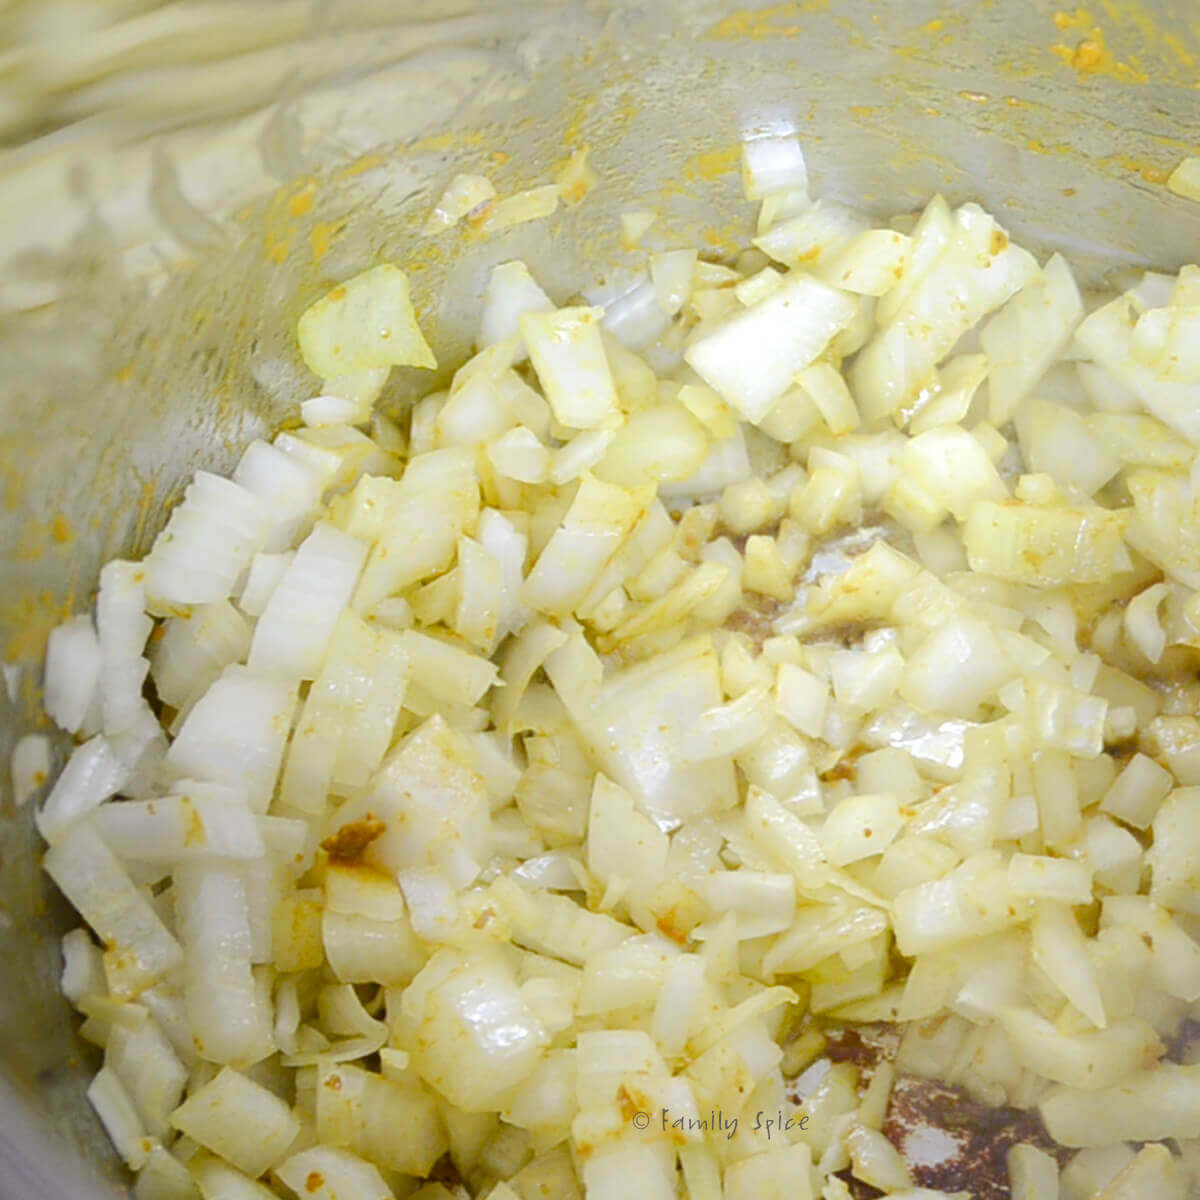 Sautéing chopped onions in an instant pot